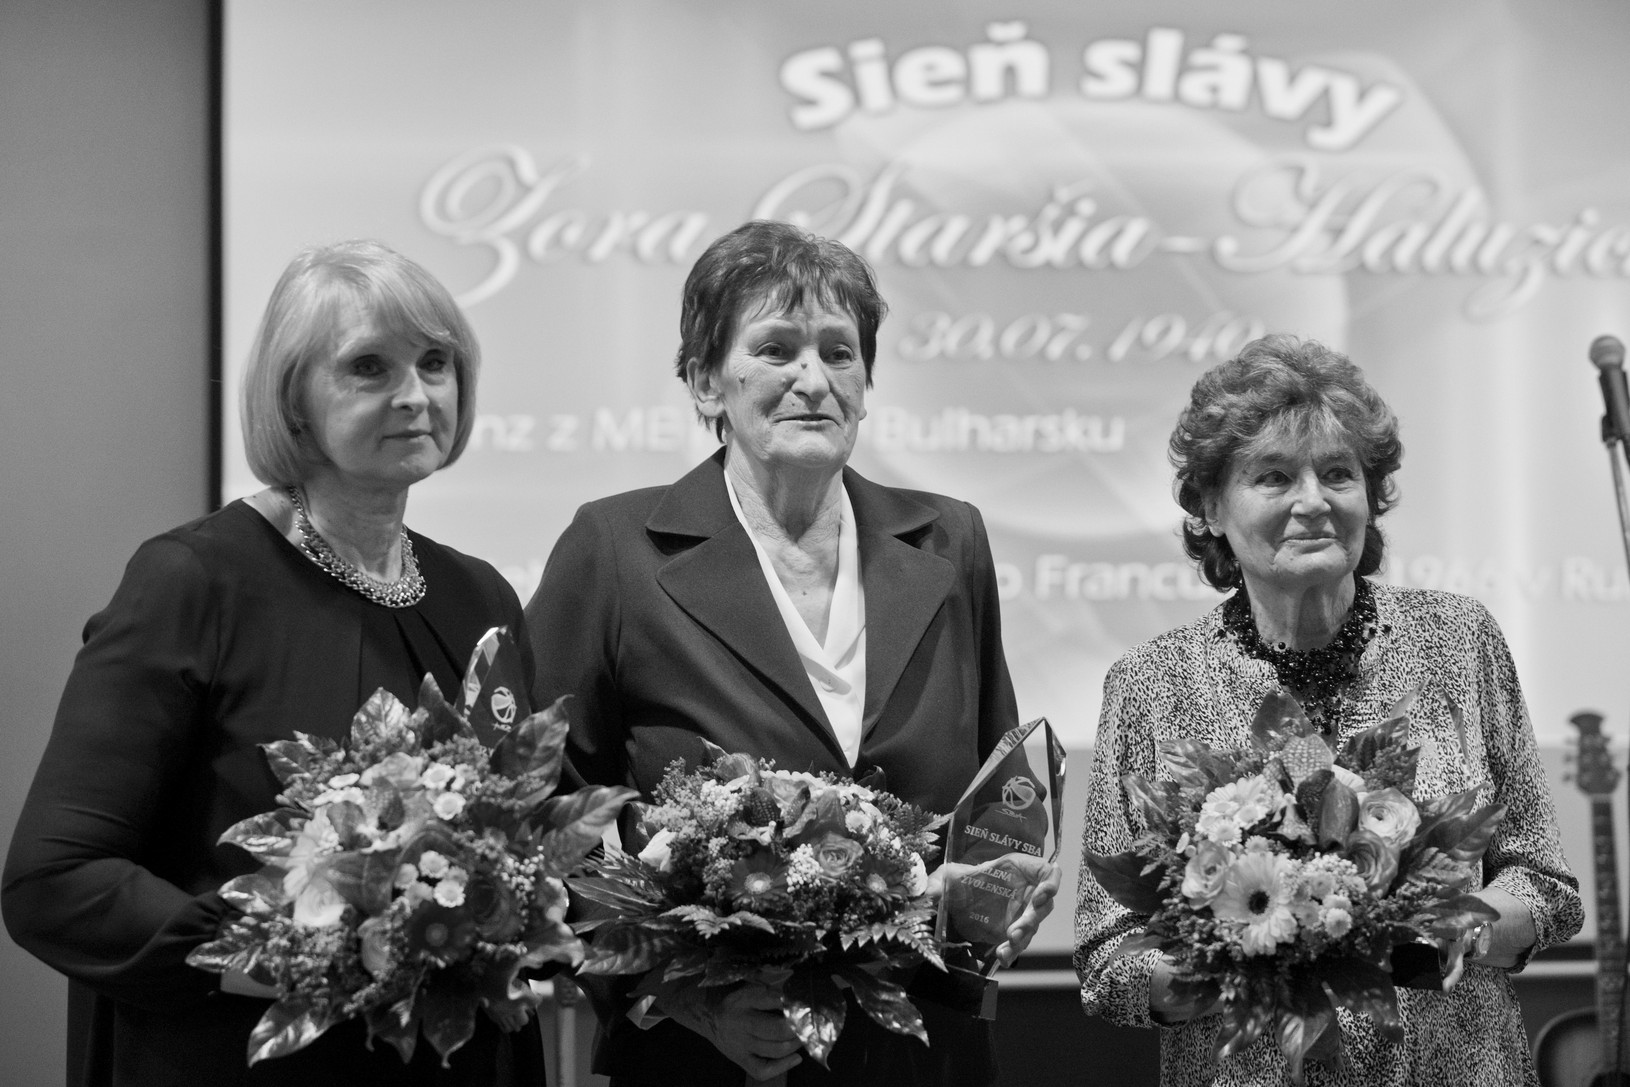 Členka Siene slávy slovenského